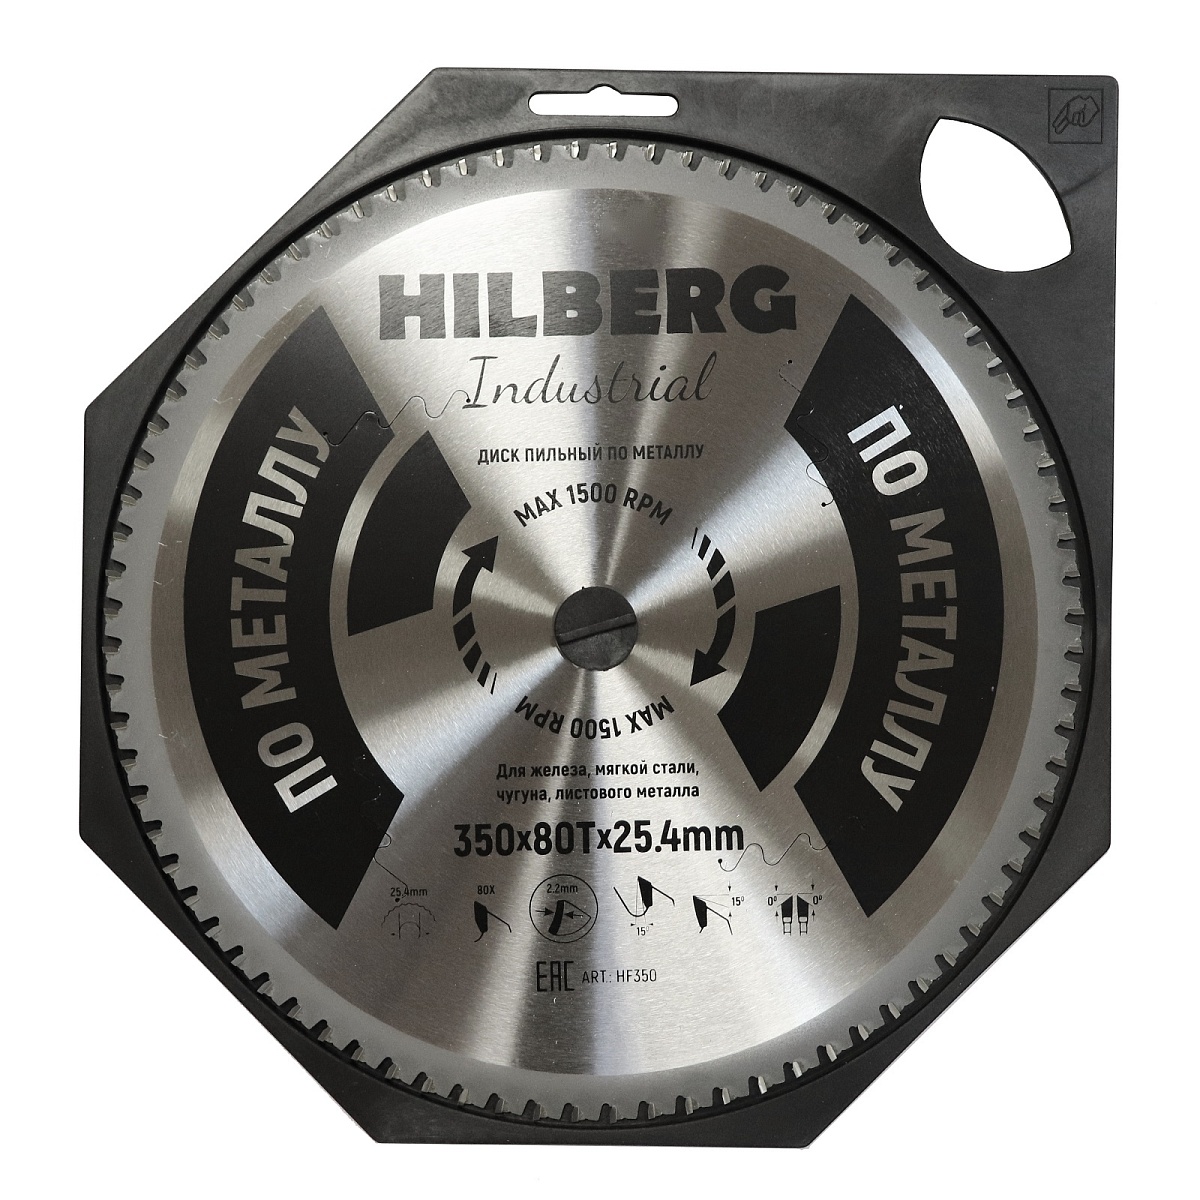 Hilberg пильный серия Industrial Металл